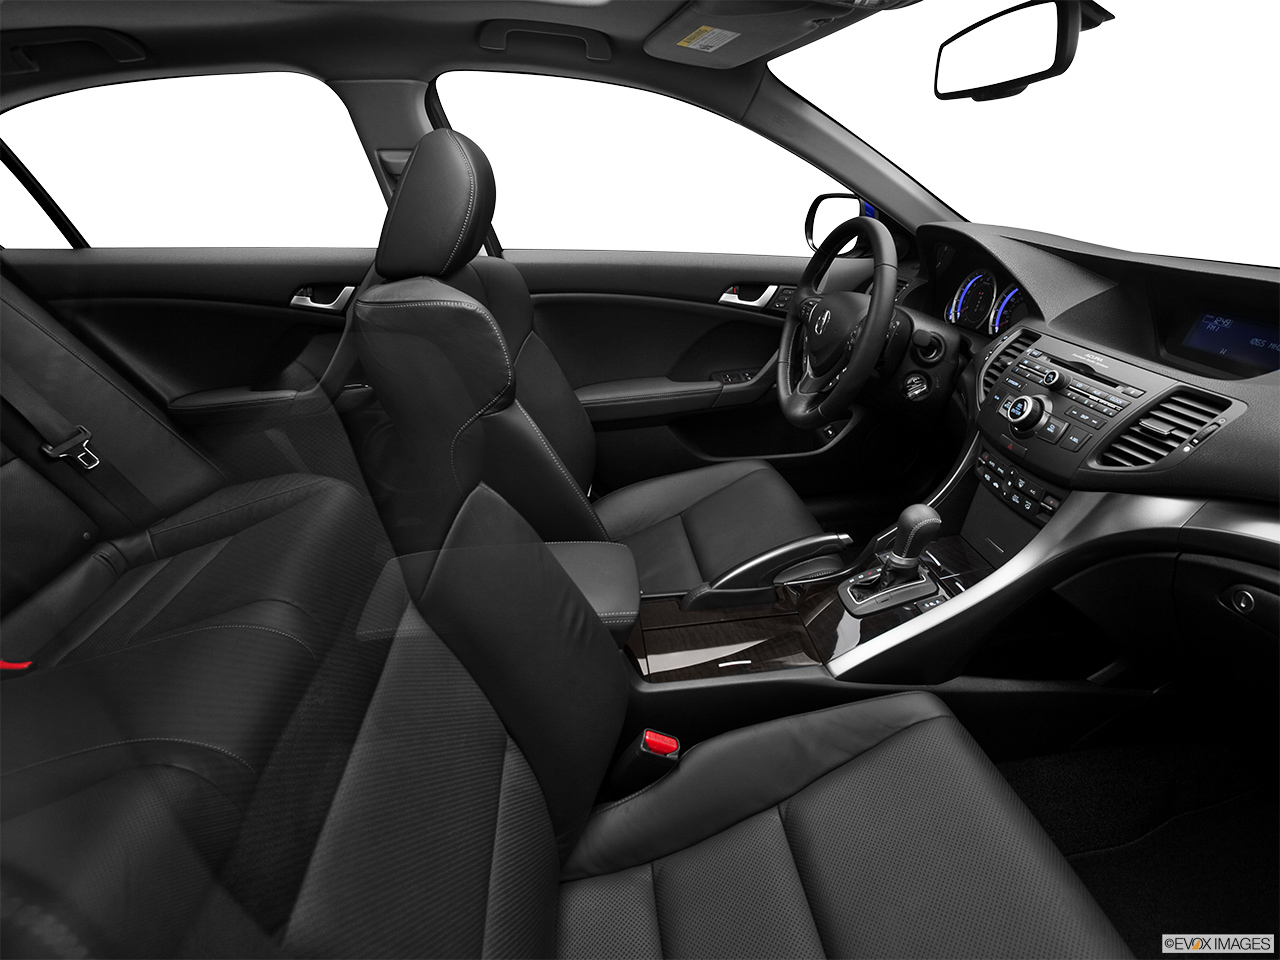 2012 Acura TSX TSX 5-speed Automatic Fake Buck Shot - Interior from Passenger B pillar. 